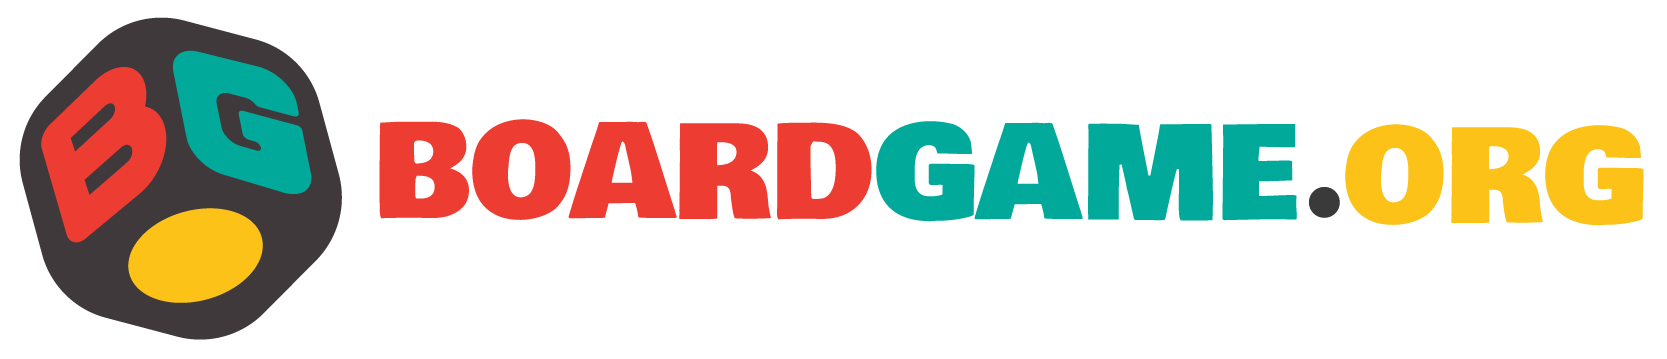 boardgame.org